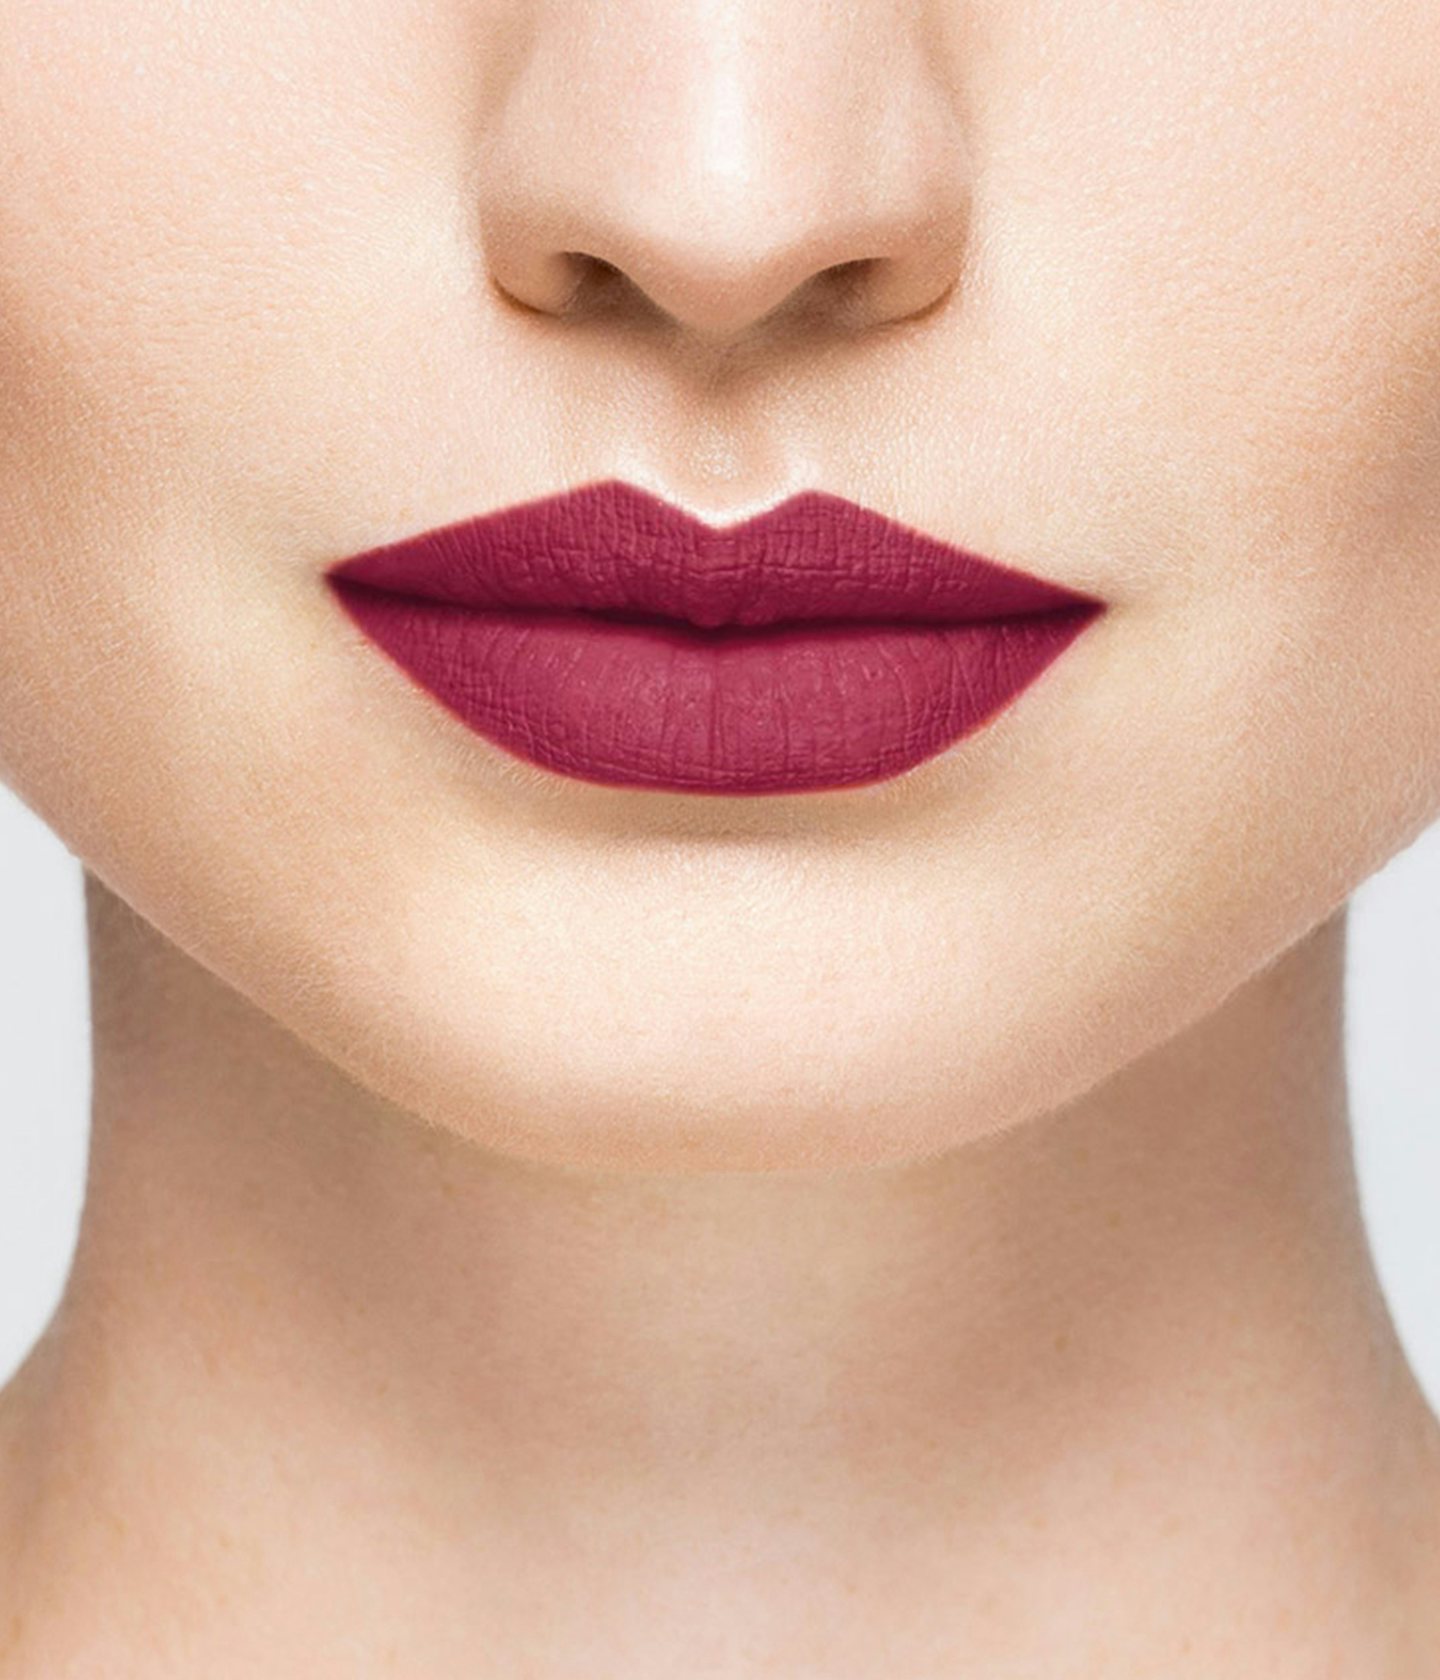 La bouche rouge Plum lipstick shade on the lips of a fair skin model